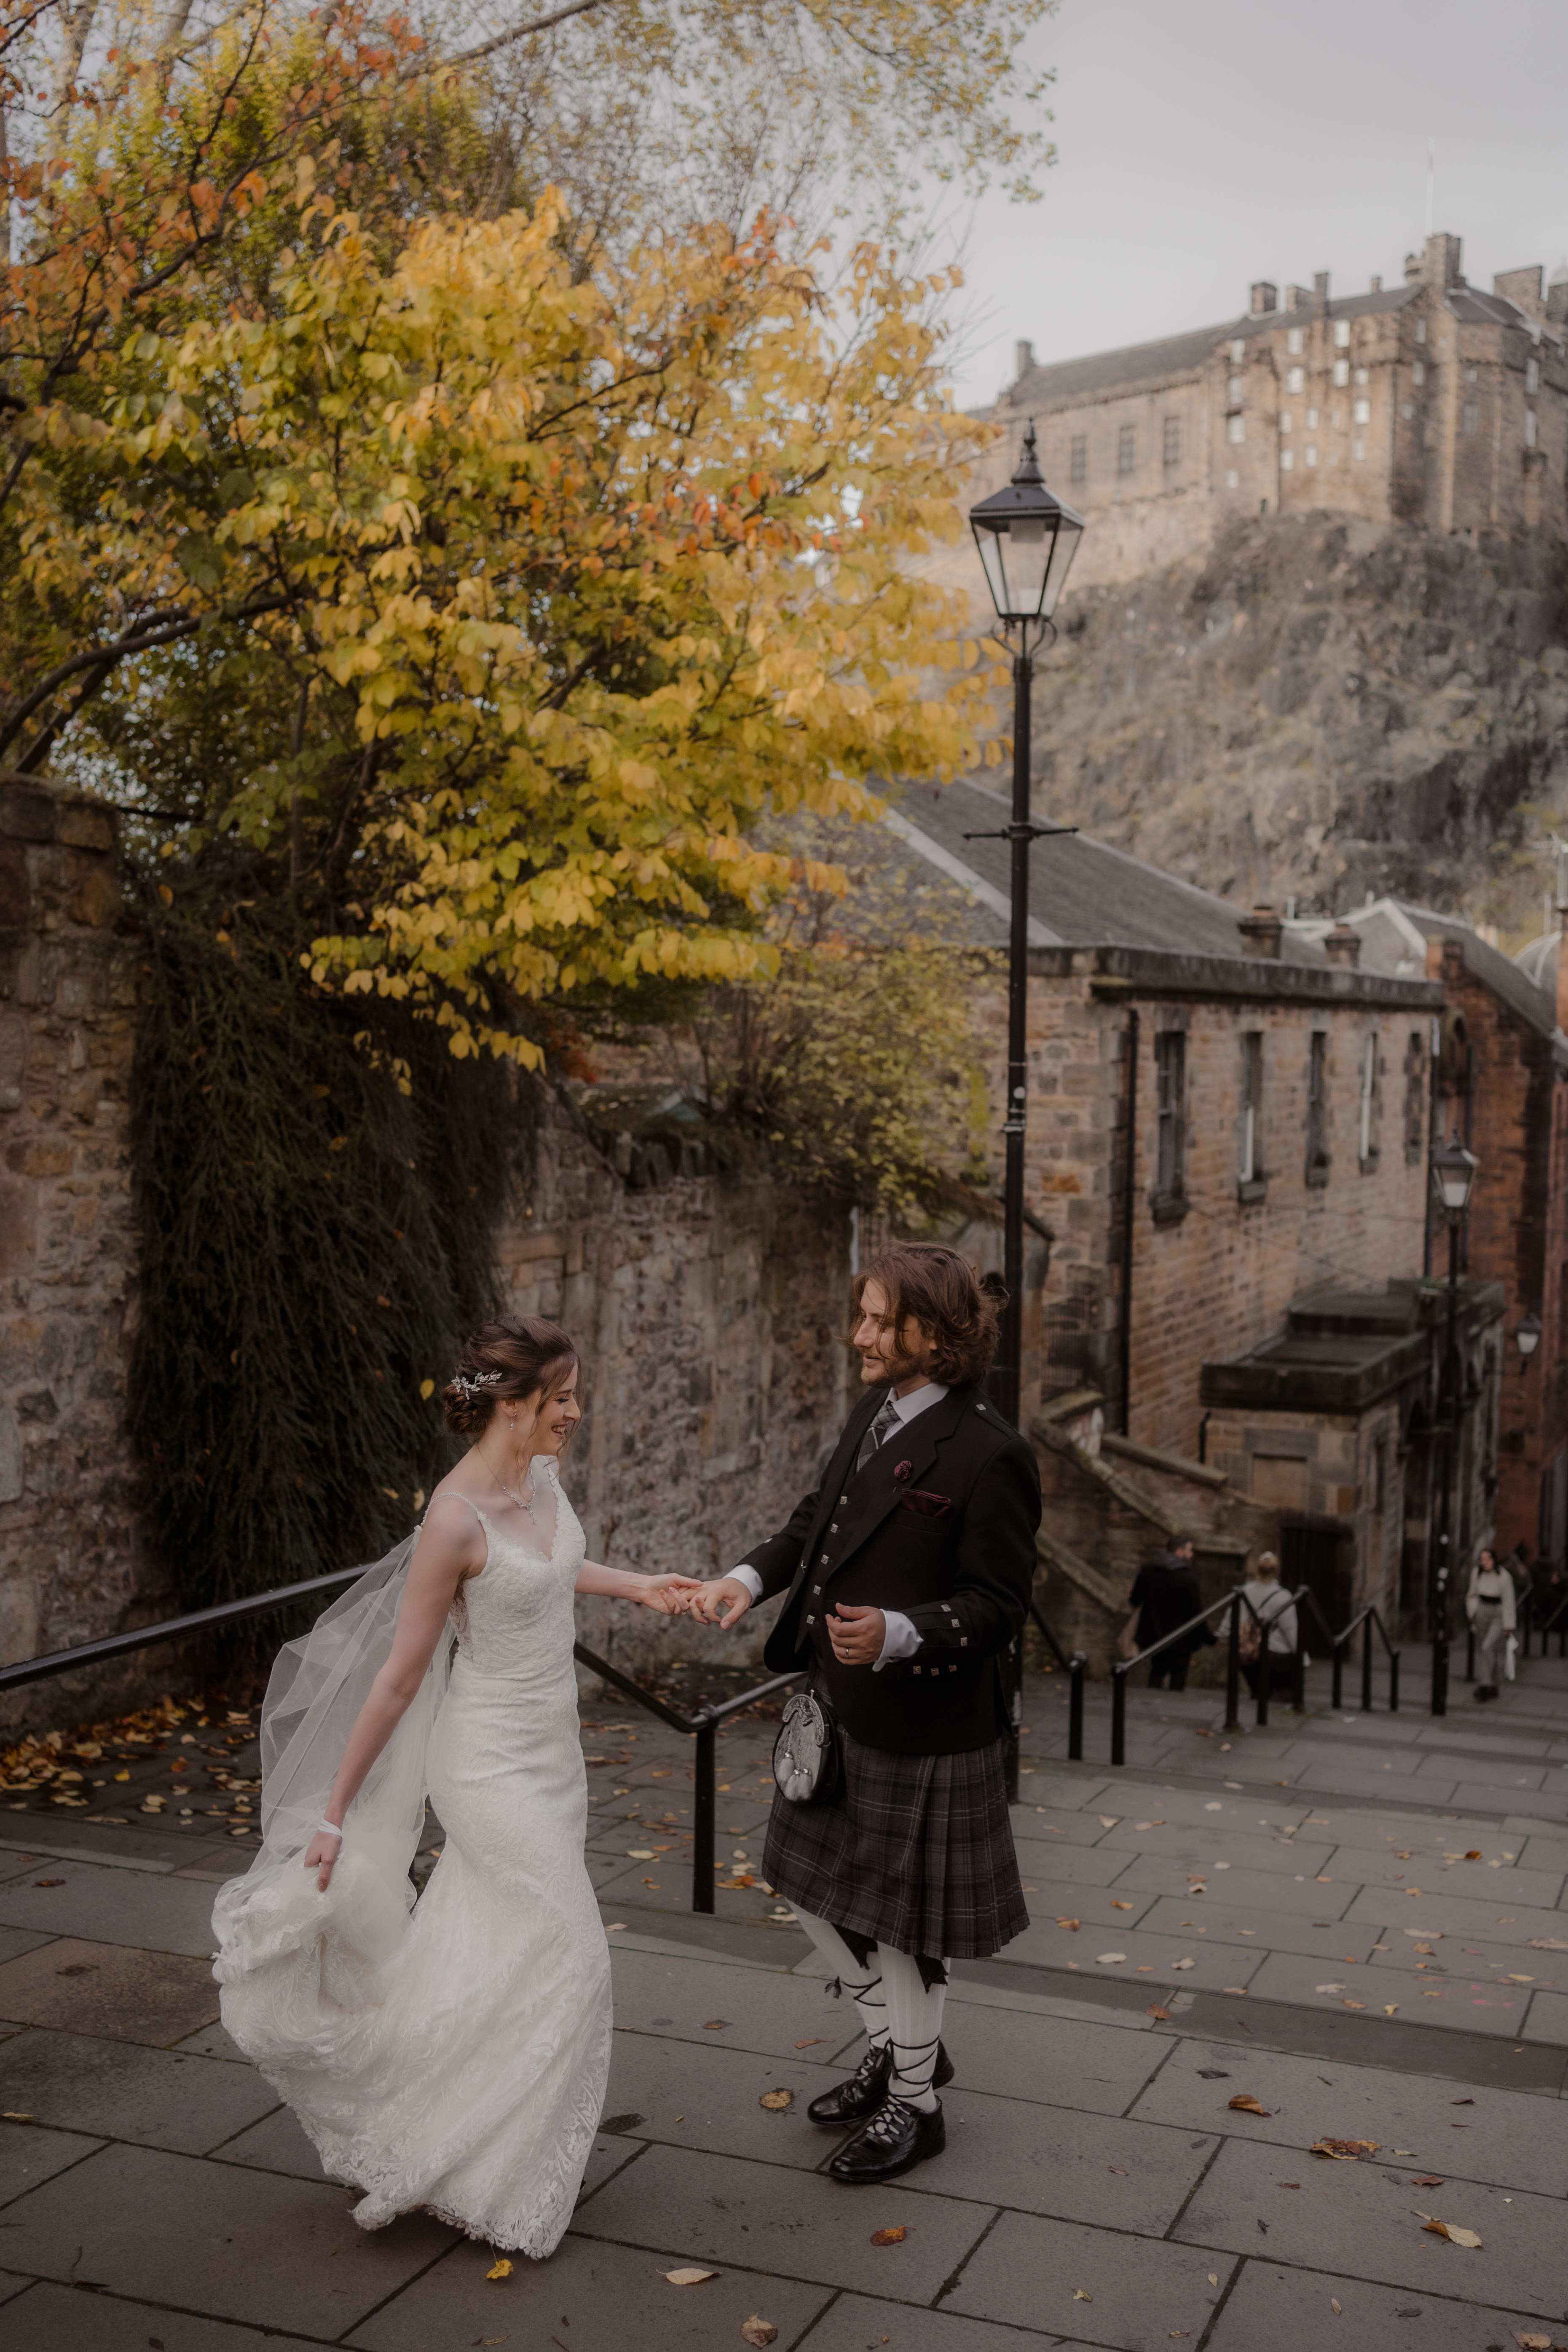 Wedding photos with Edinburgh Castle in the background